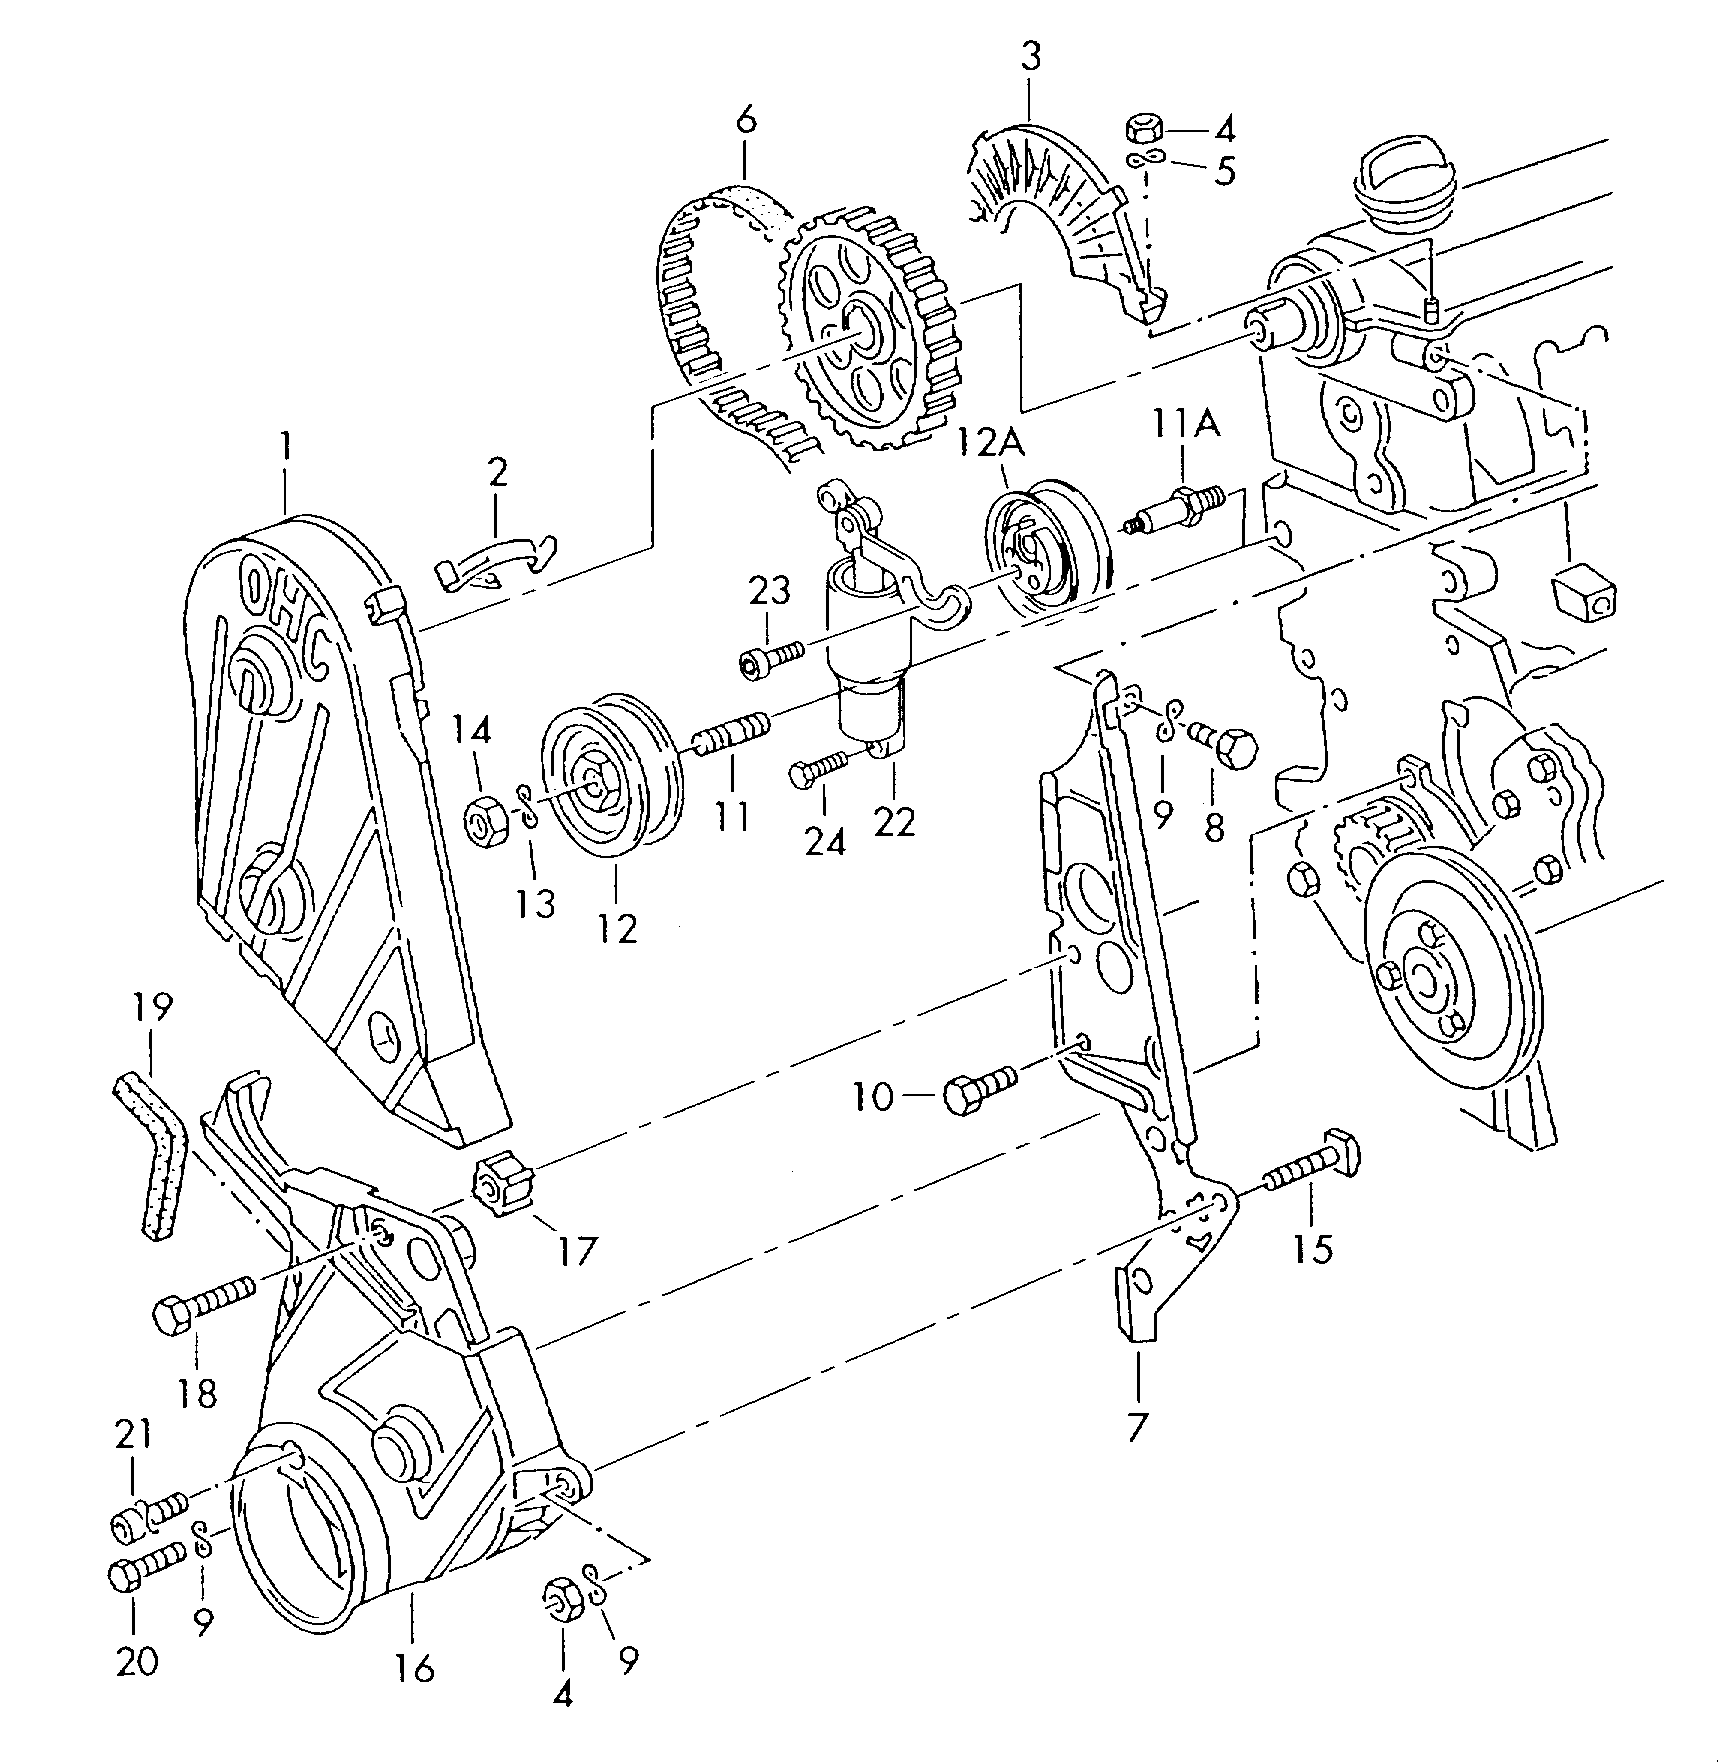 Triger kayışı; Triger kayışı koruyucu - Alhambra(AL)  